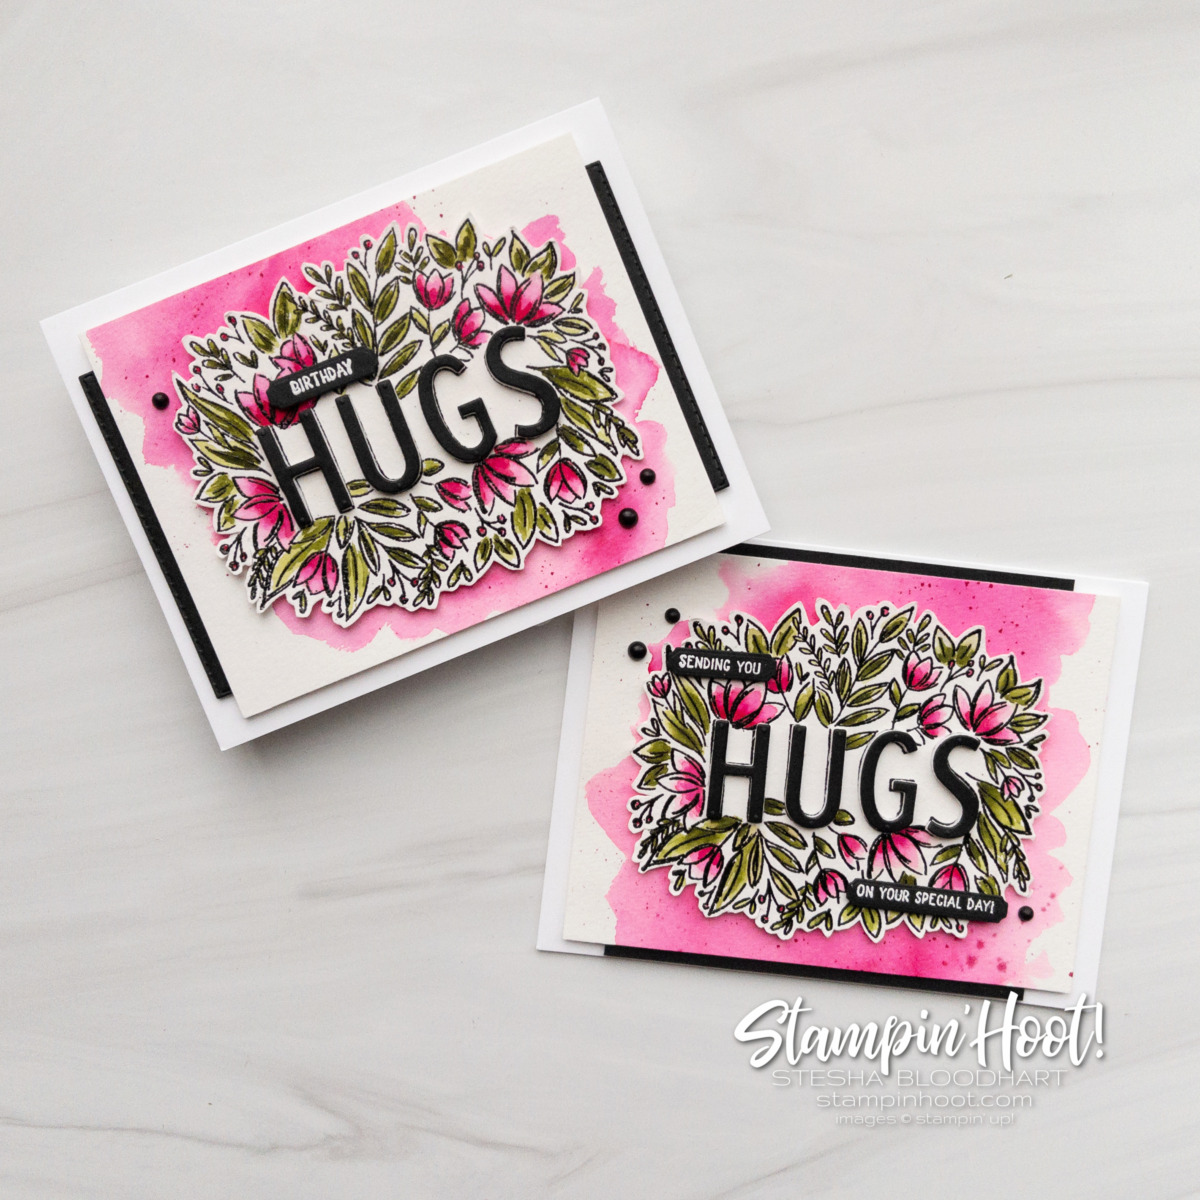 Birthday Hugs Card Duo using Sending Hugs Bundle from Stampin' Up! Stesha Bloodhart, Stampin' Hoot!